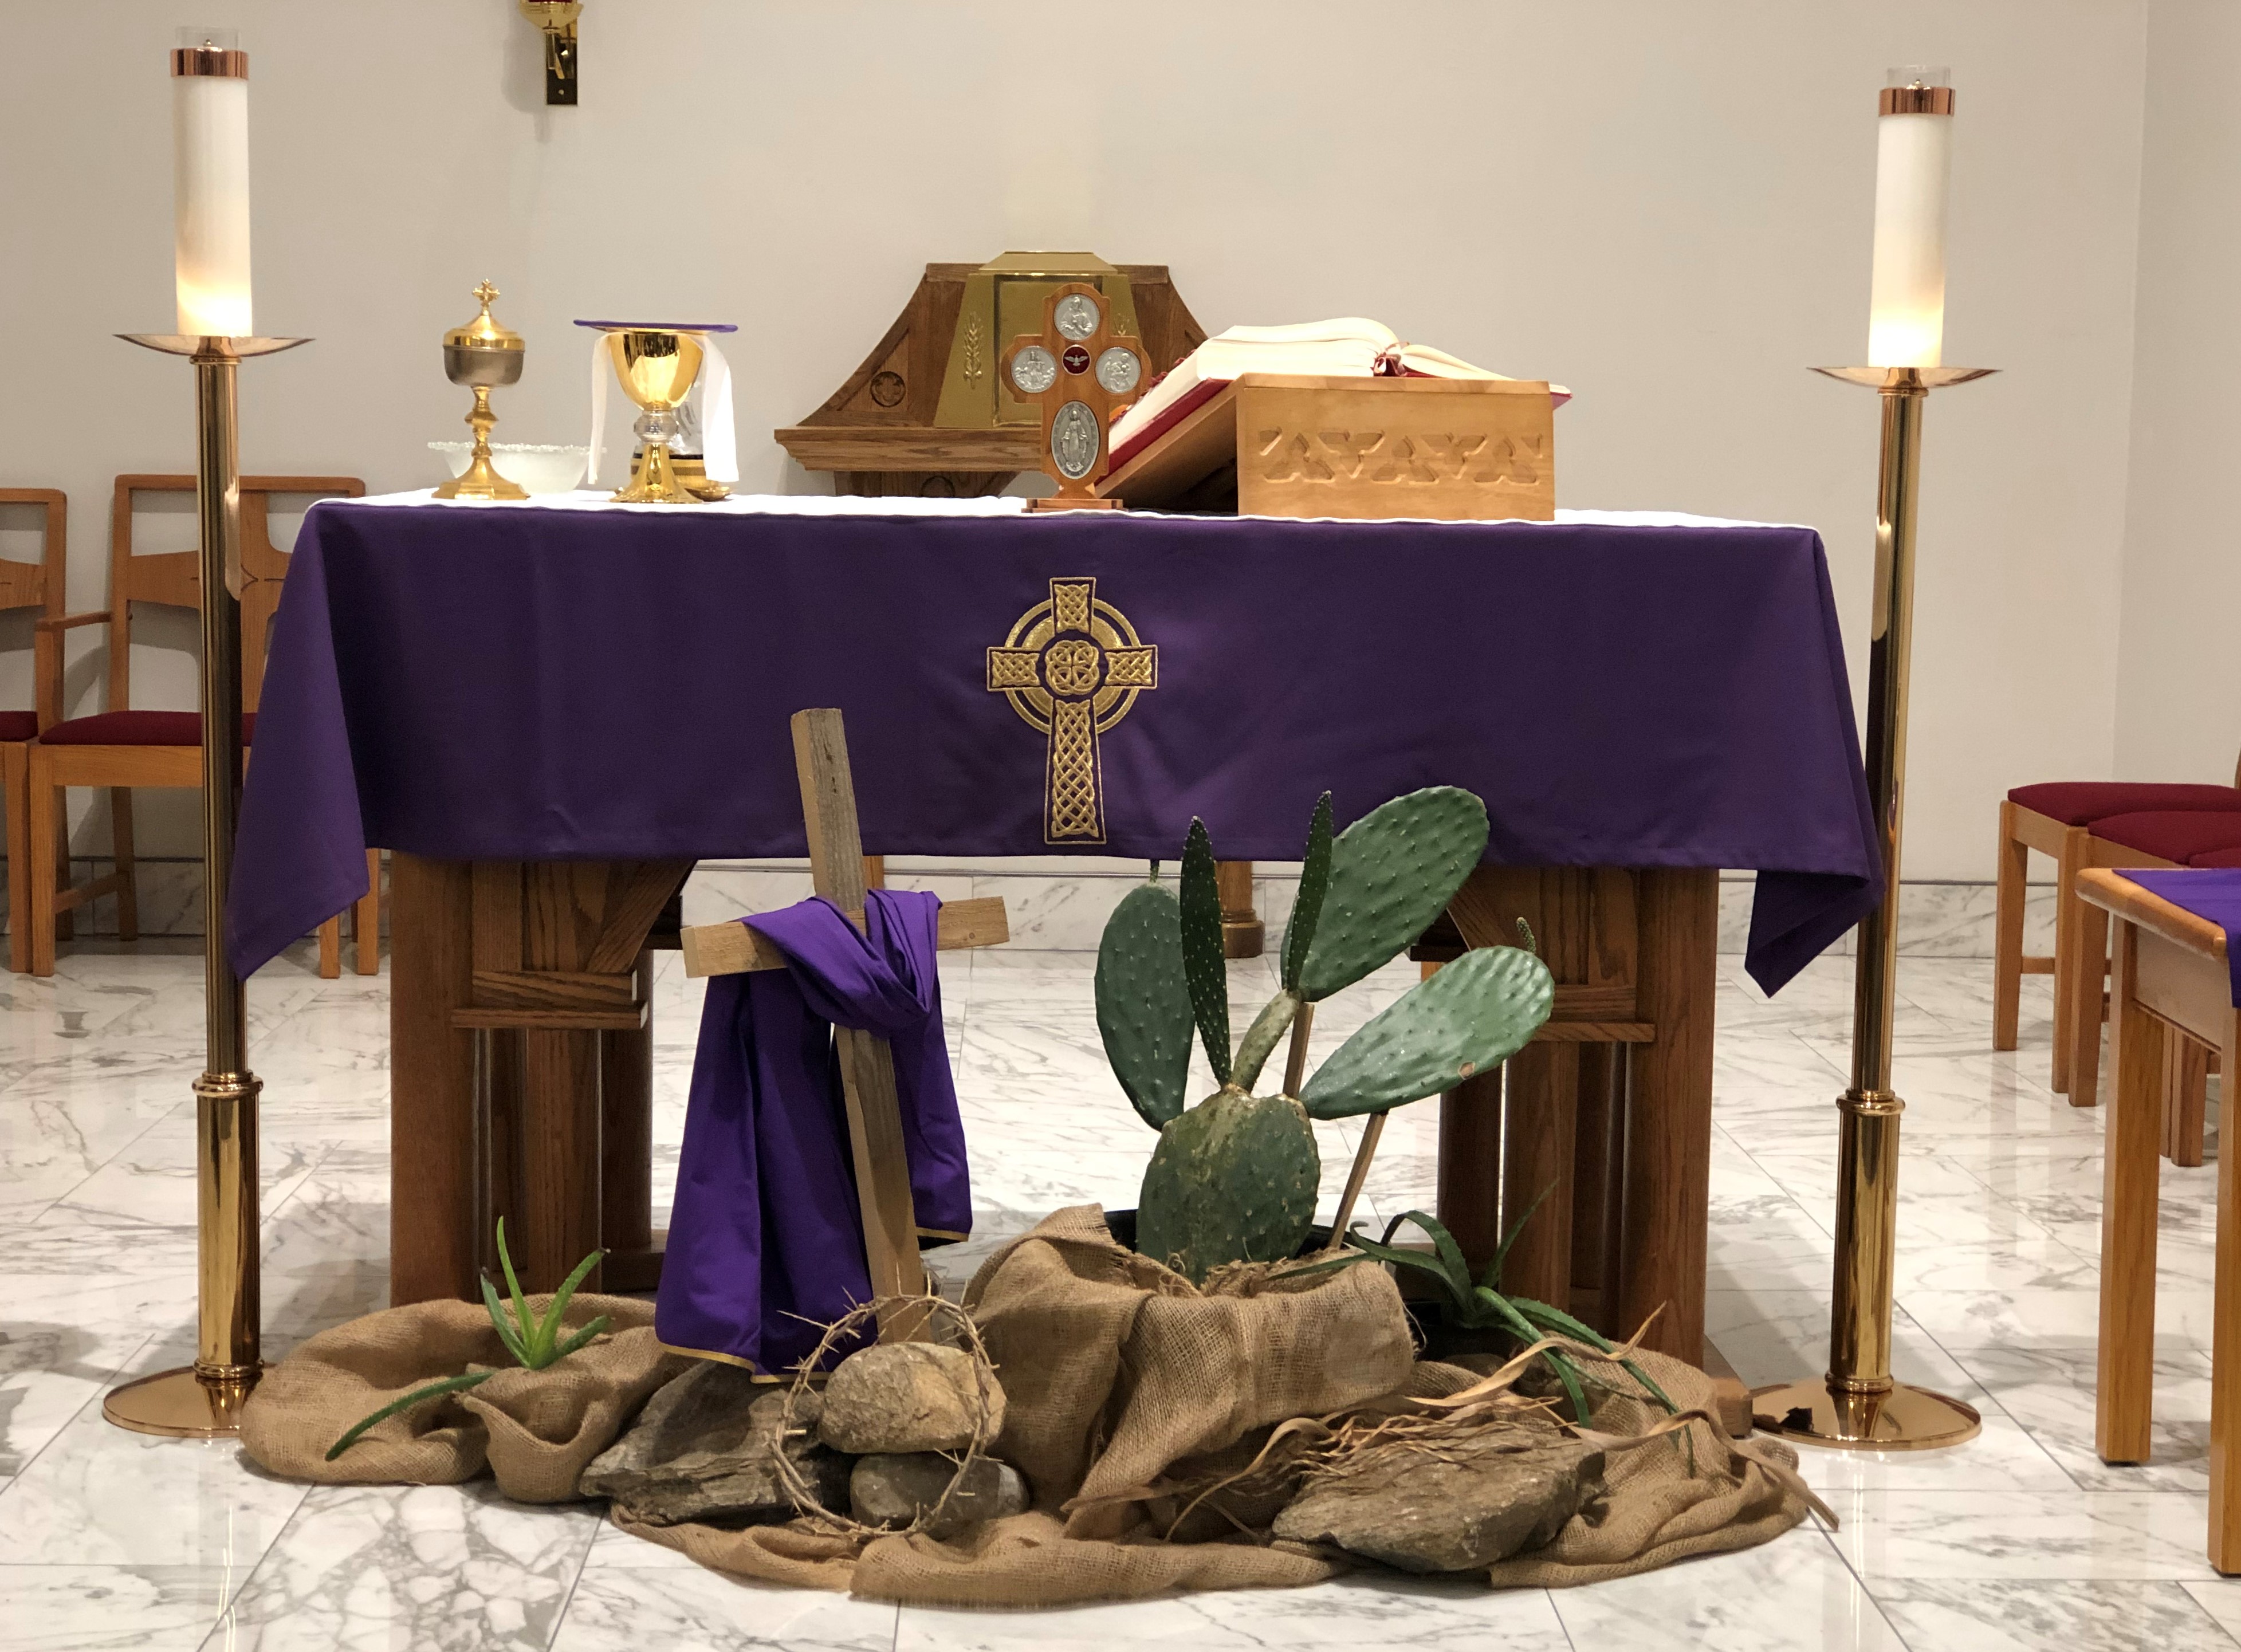 St. Patrick's Lent Altar